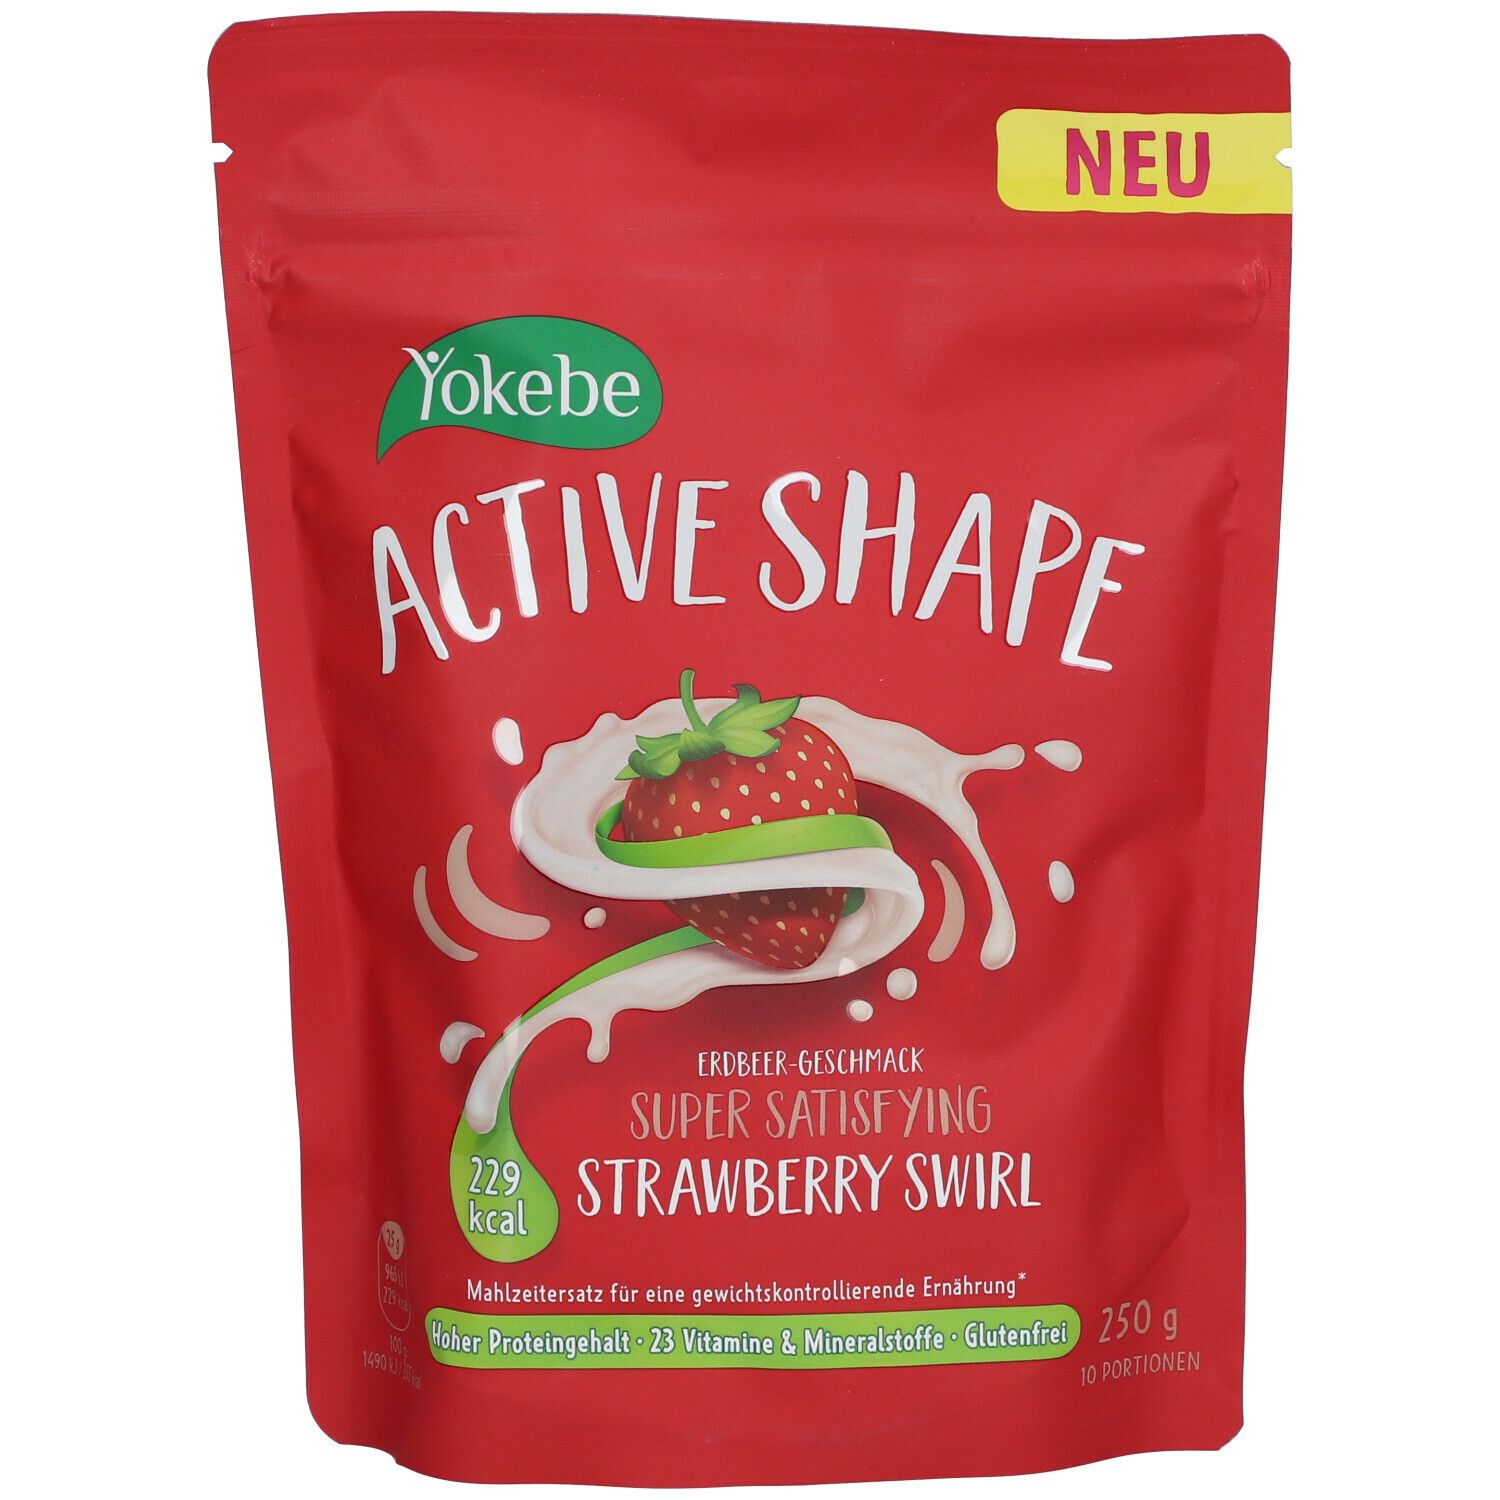 Yokebe Active Shape Strawberry Swirl